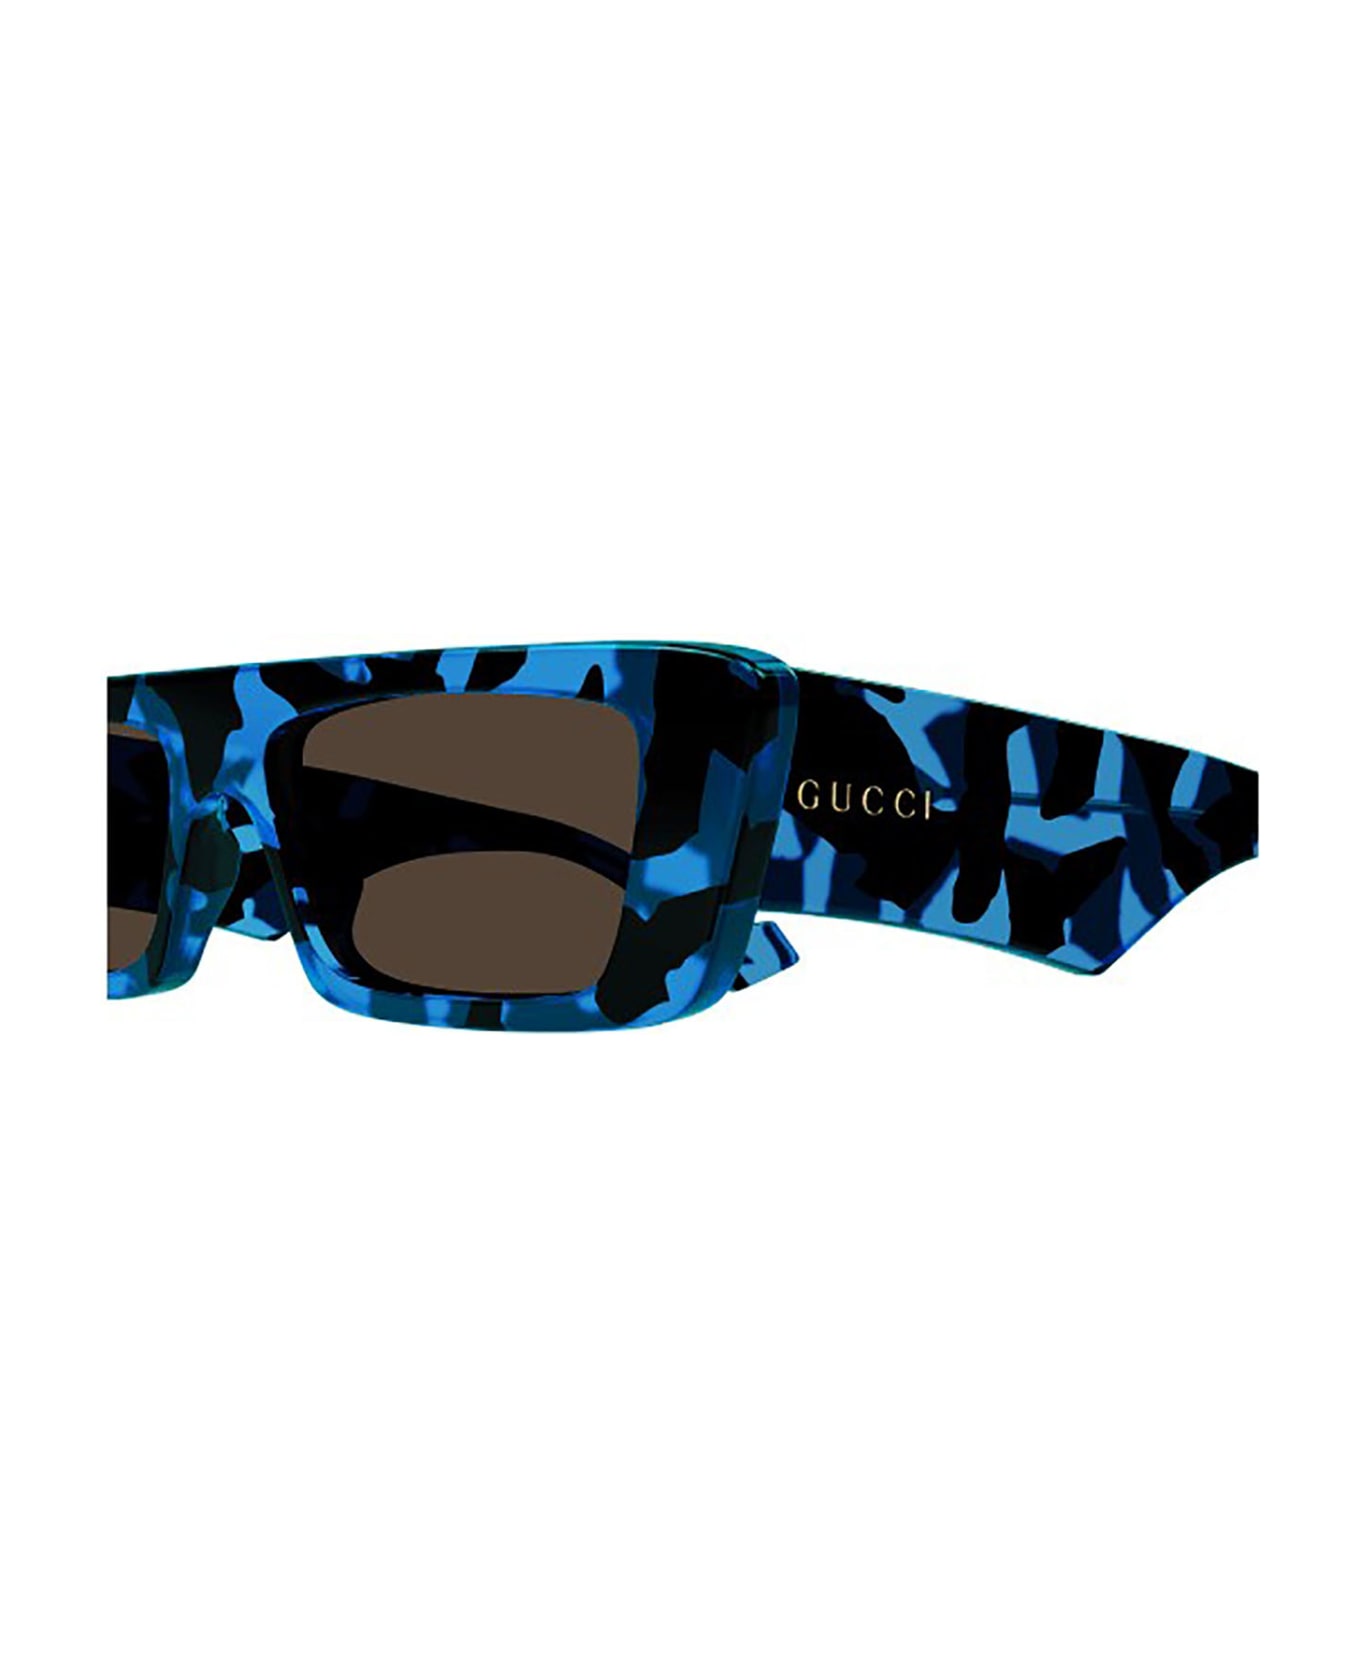 Gucci Eyewear GG1331S Sunglasses - Havana Havana Brown